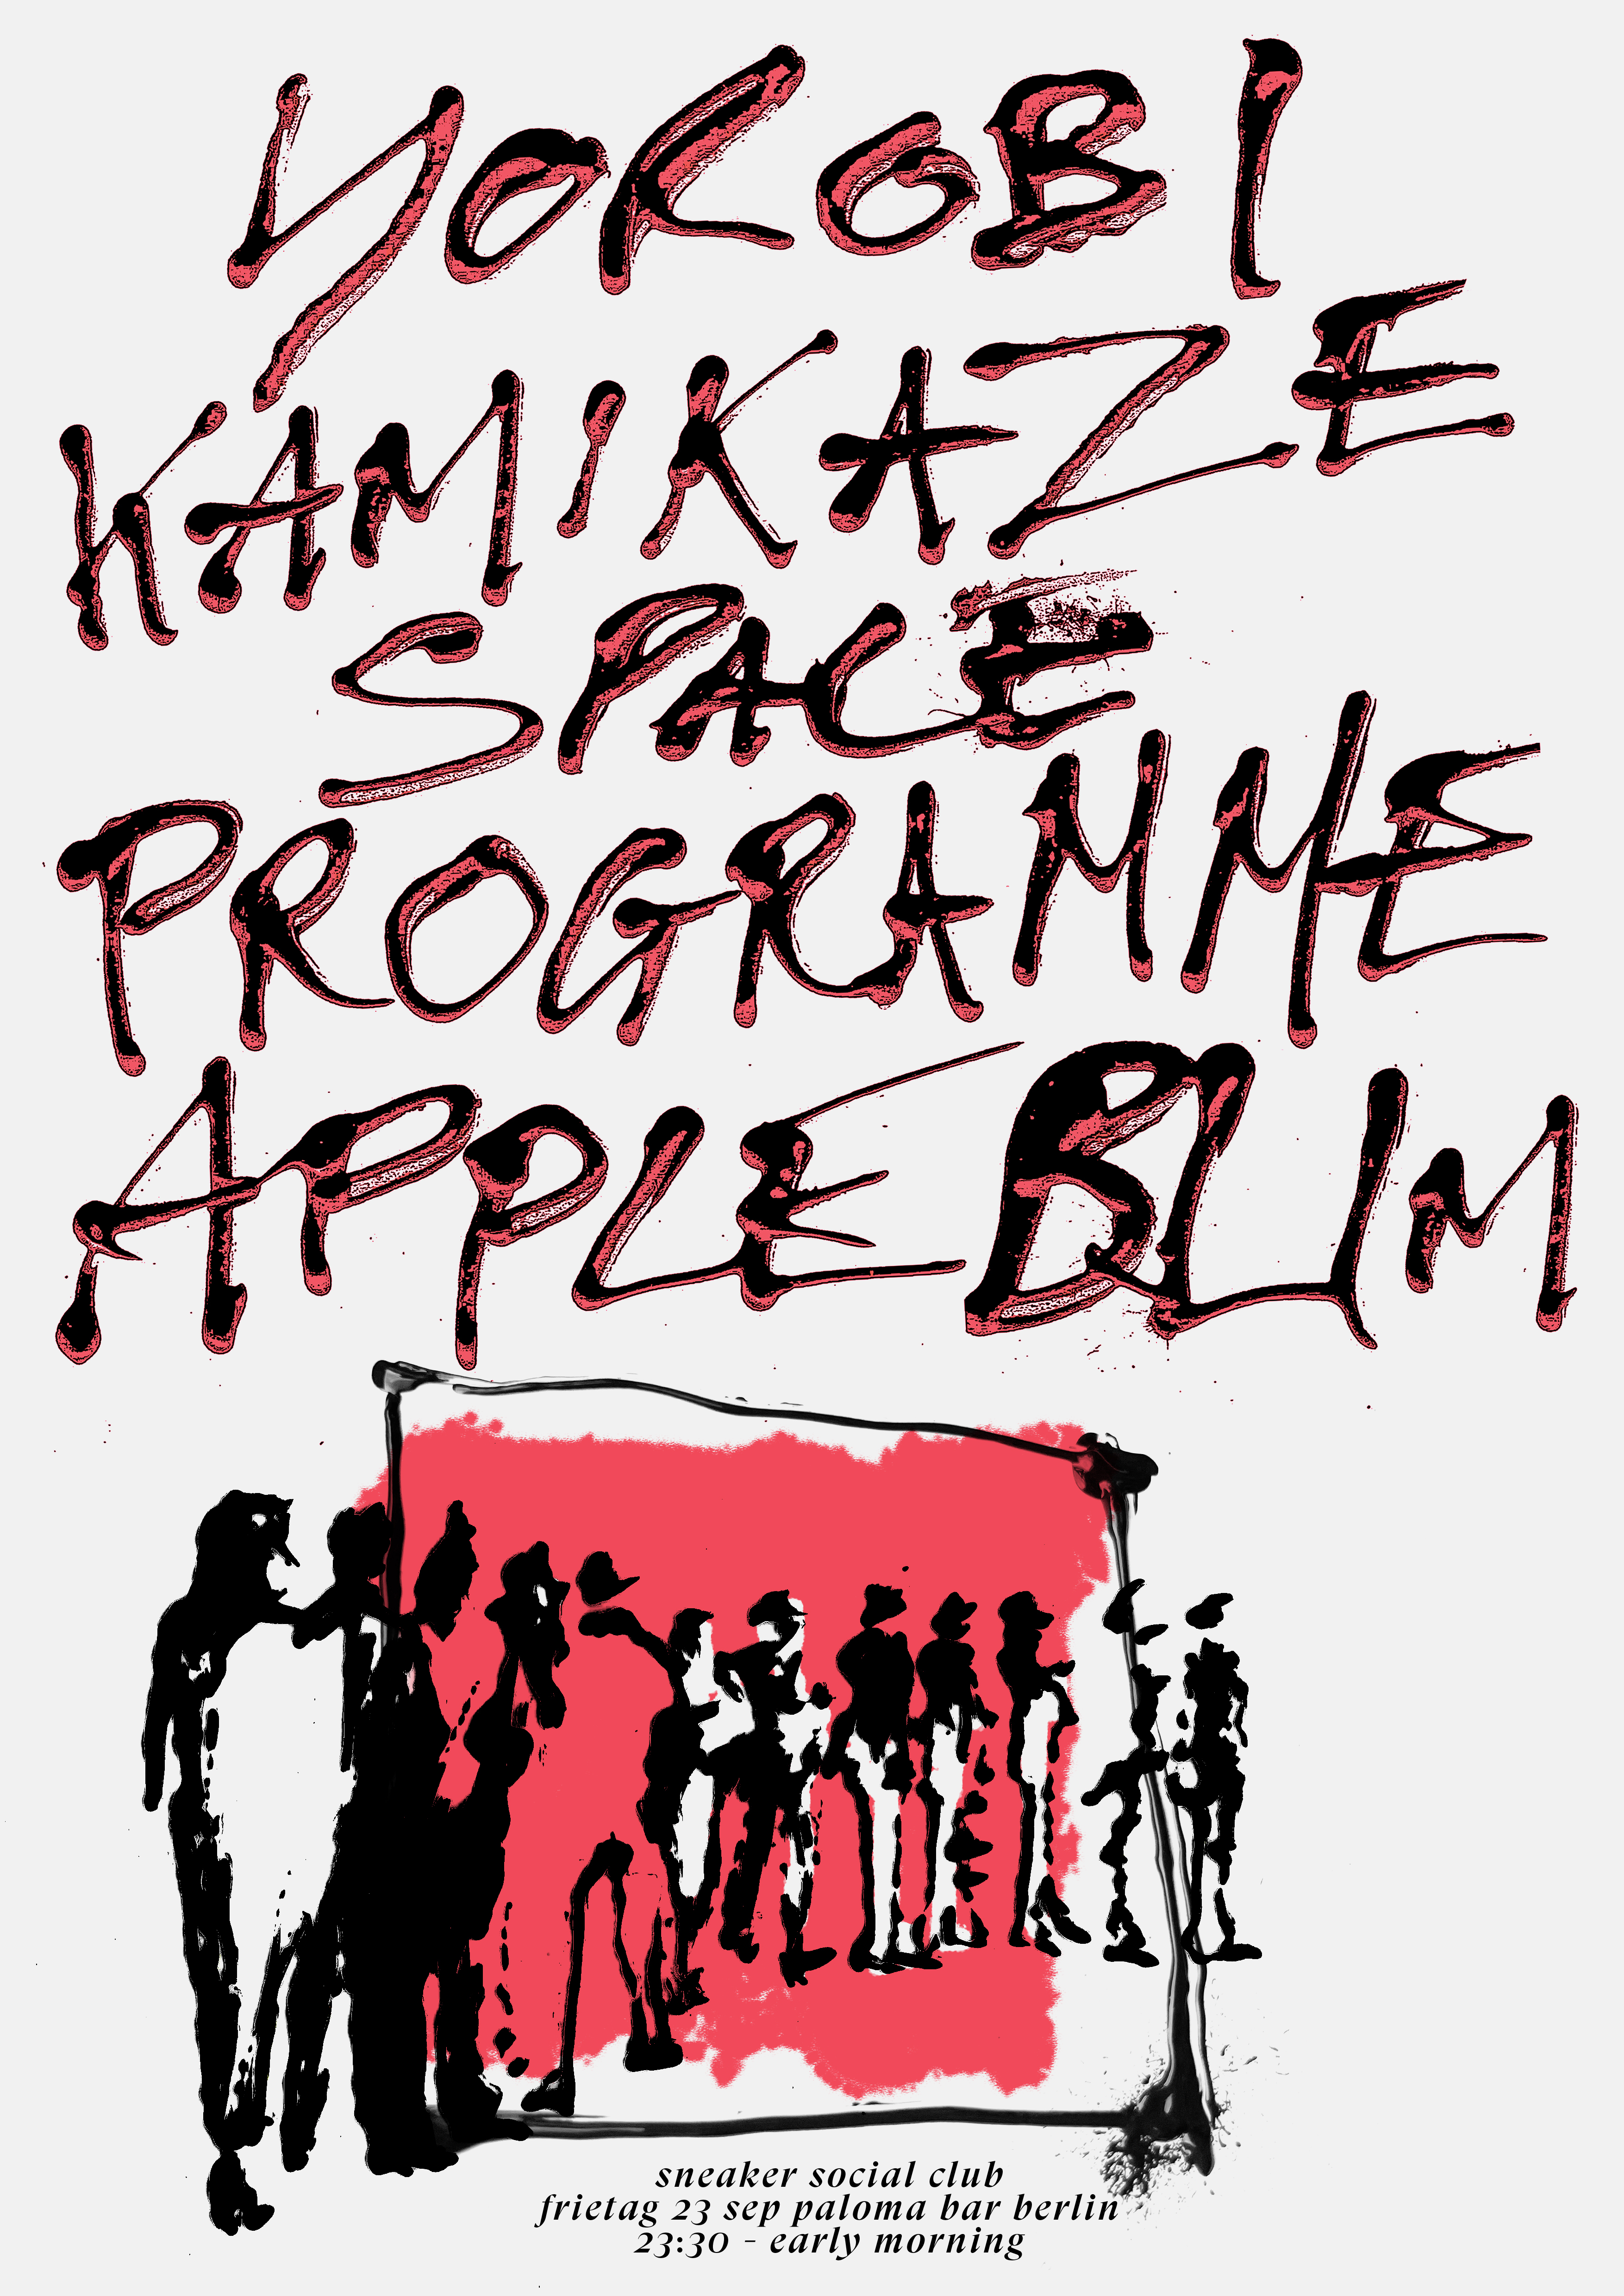 Sneaker Social Club w/ Yorobi, Kamikaze Space Programme & Appleblim - Flyer front